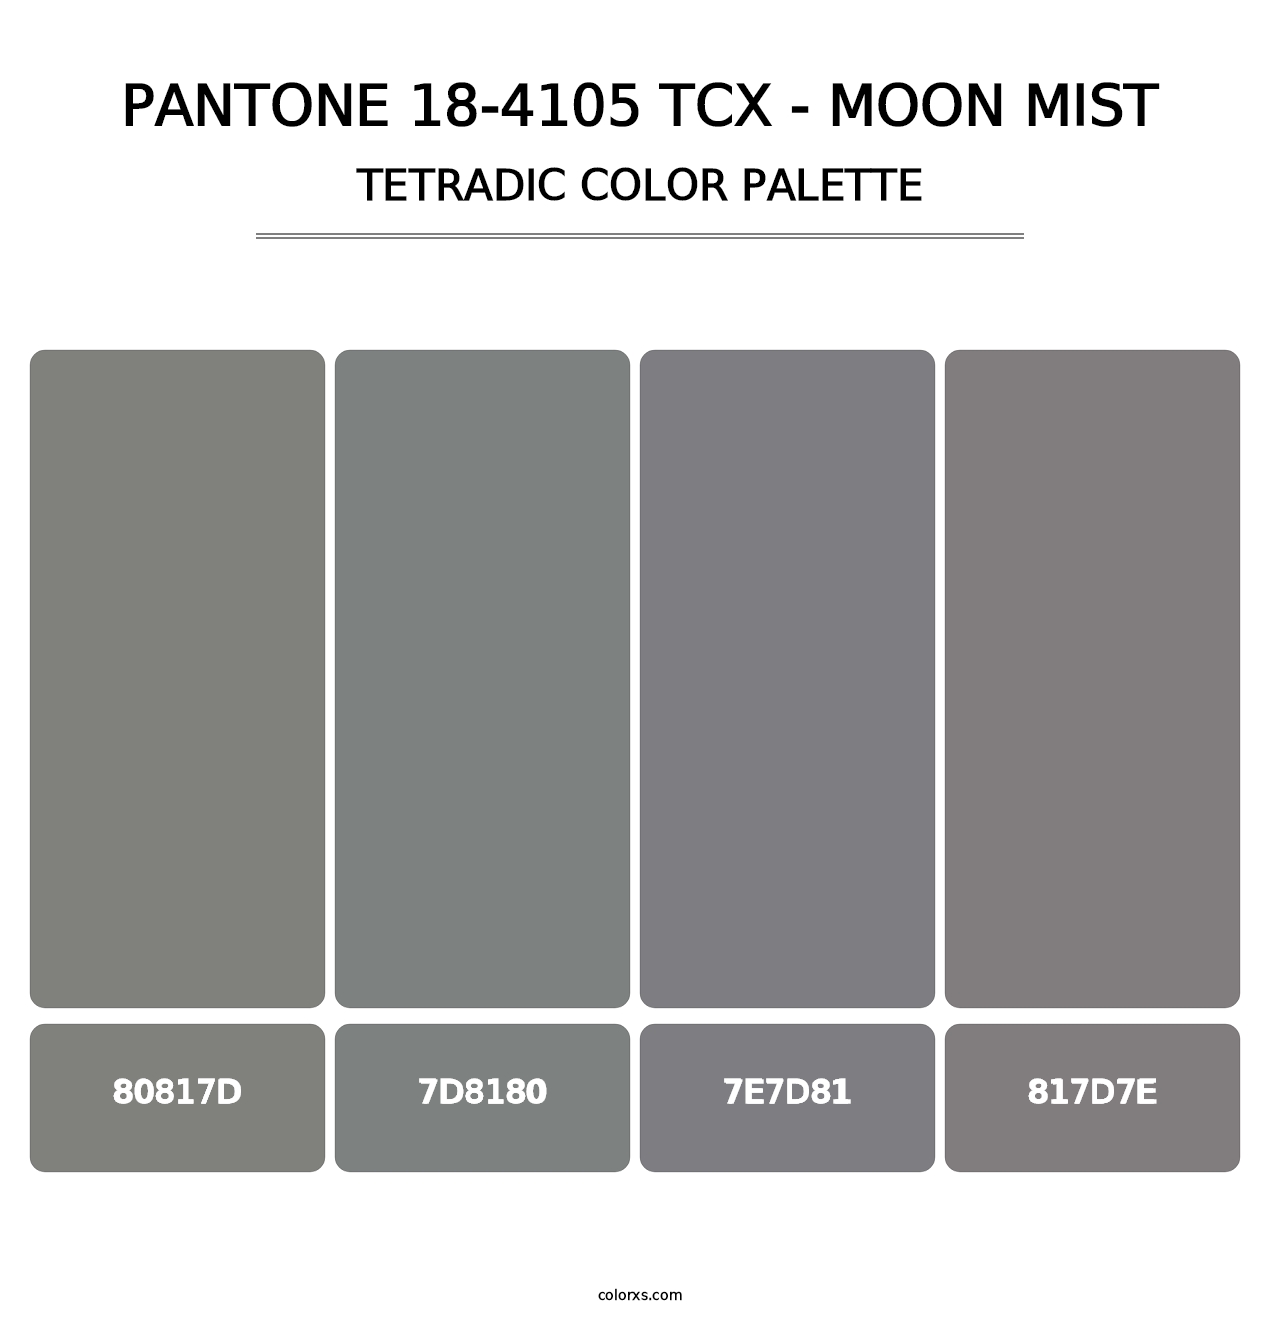 PANTONE 18-4105 TCX - Moon Mist - Tetradic Color Palette